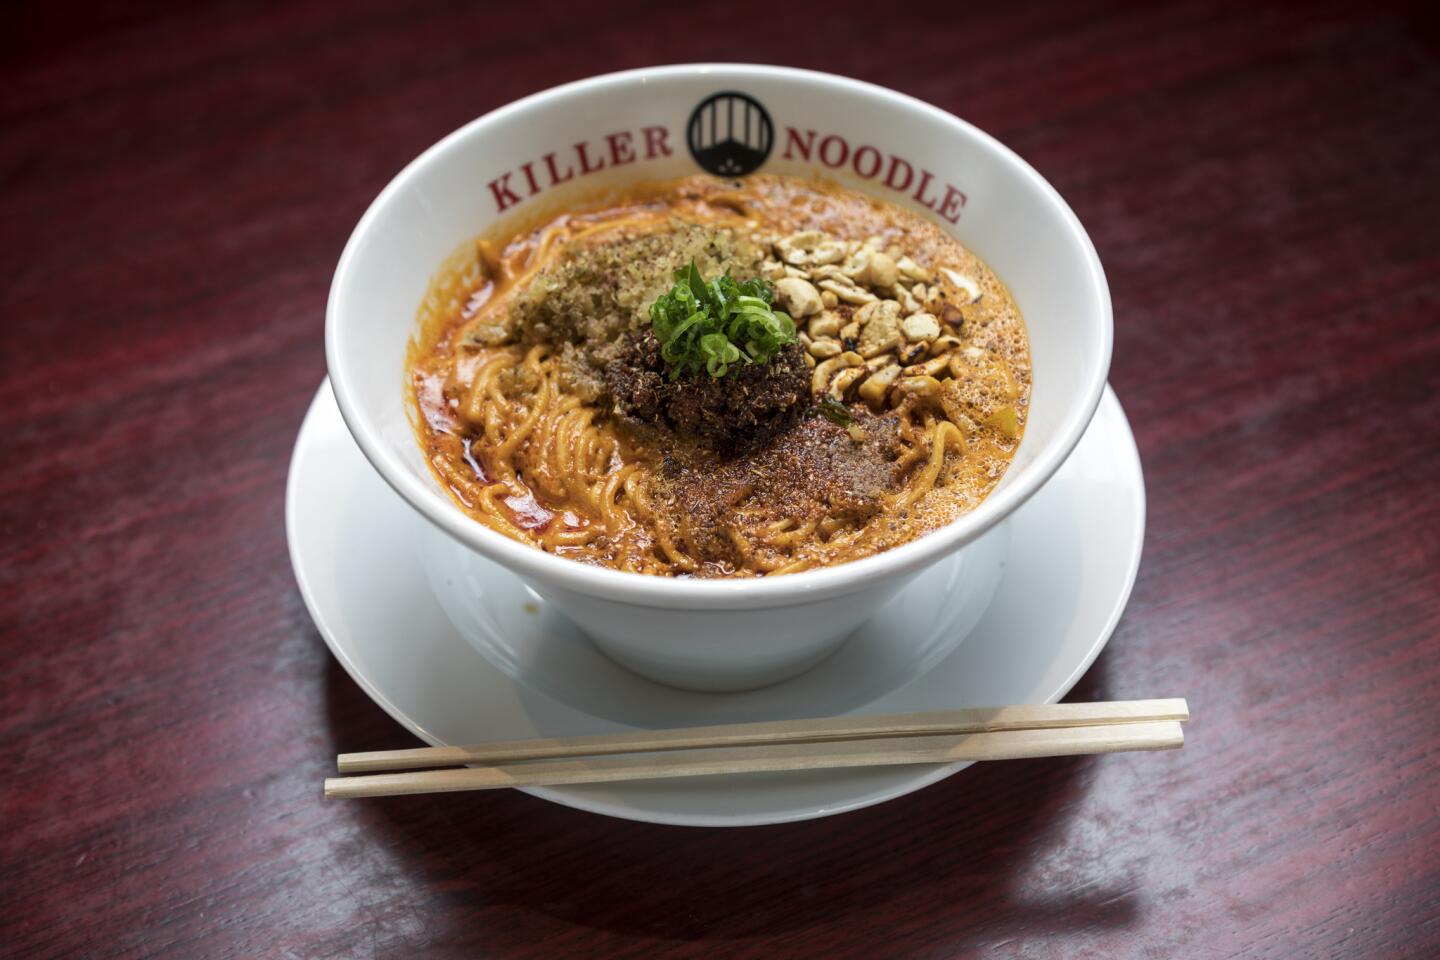 Tokyo-style ramen served at Killer Noodle on Sawtelle.